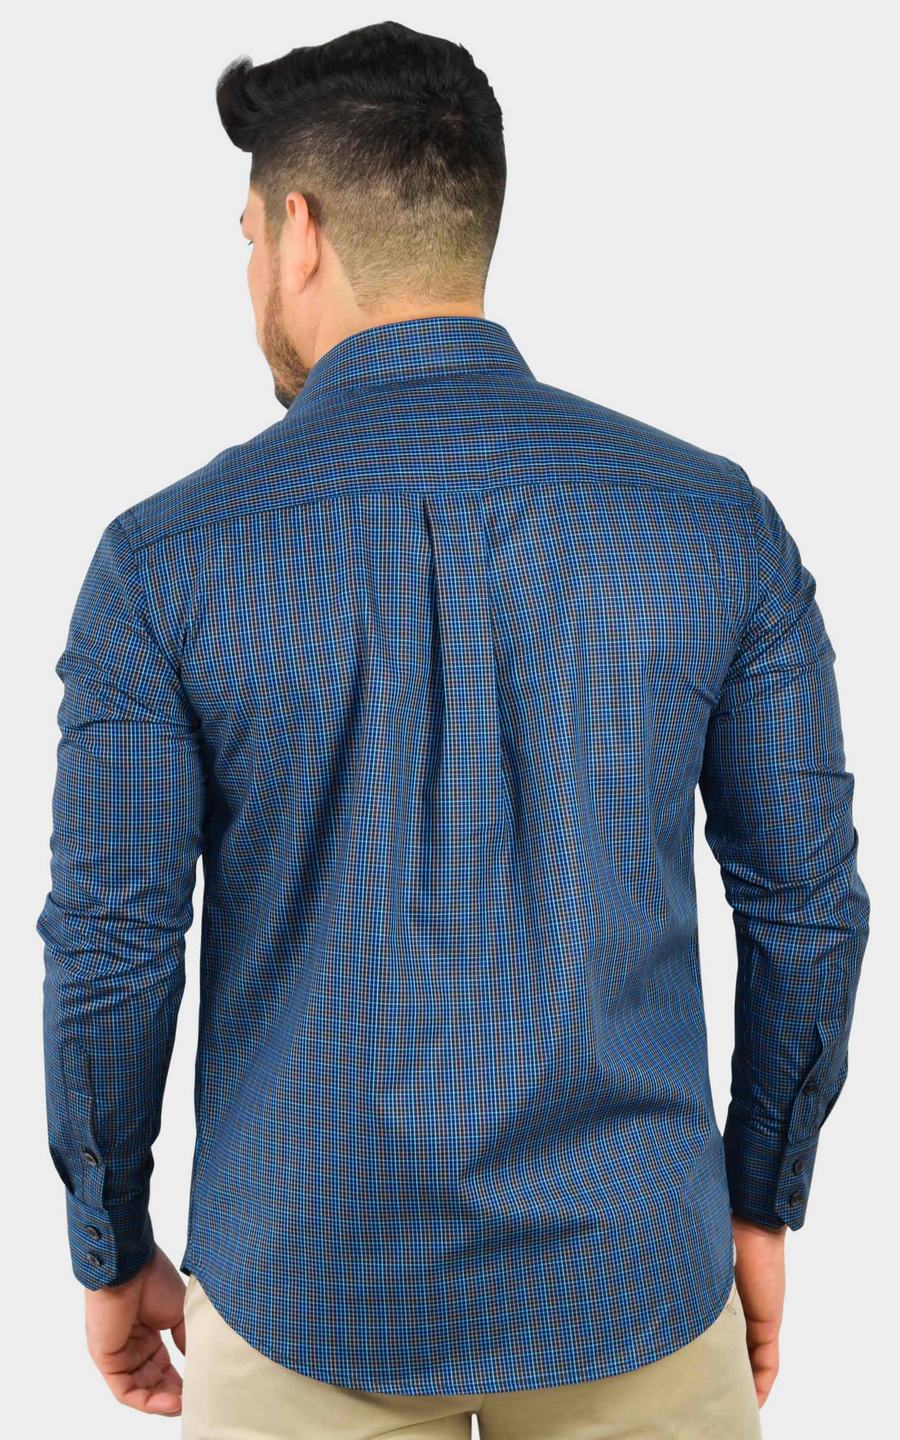 Wholesale Egyptian cotton blue men’s dress shirt plaid - Farg Store